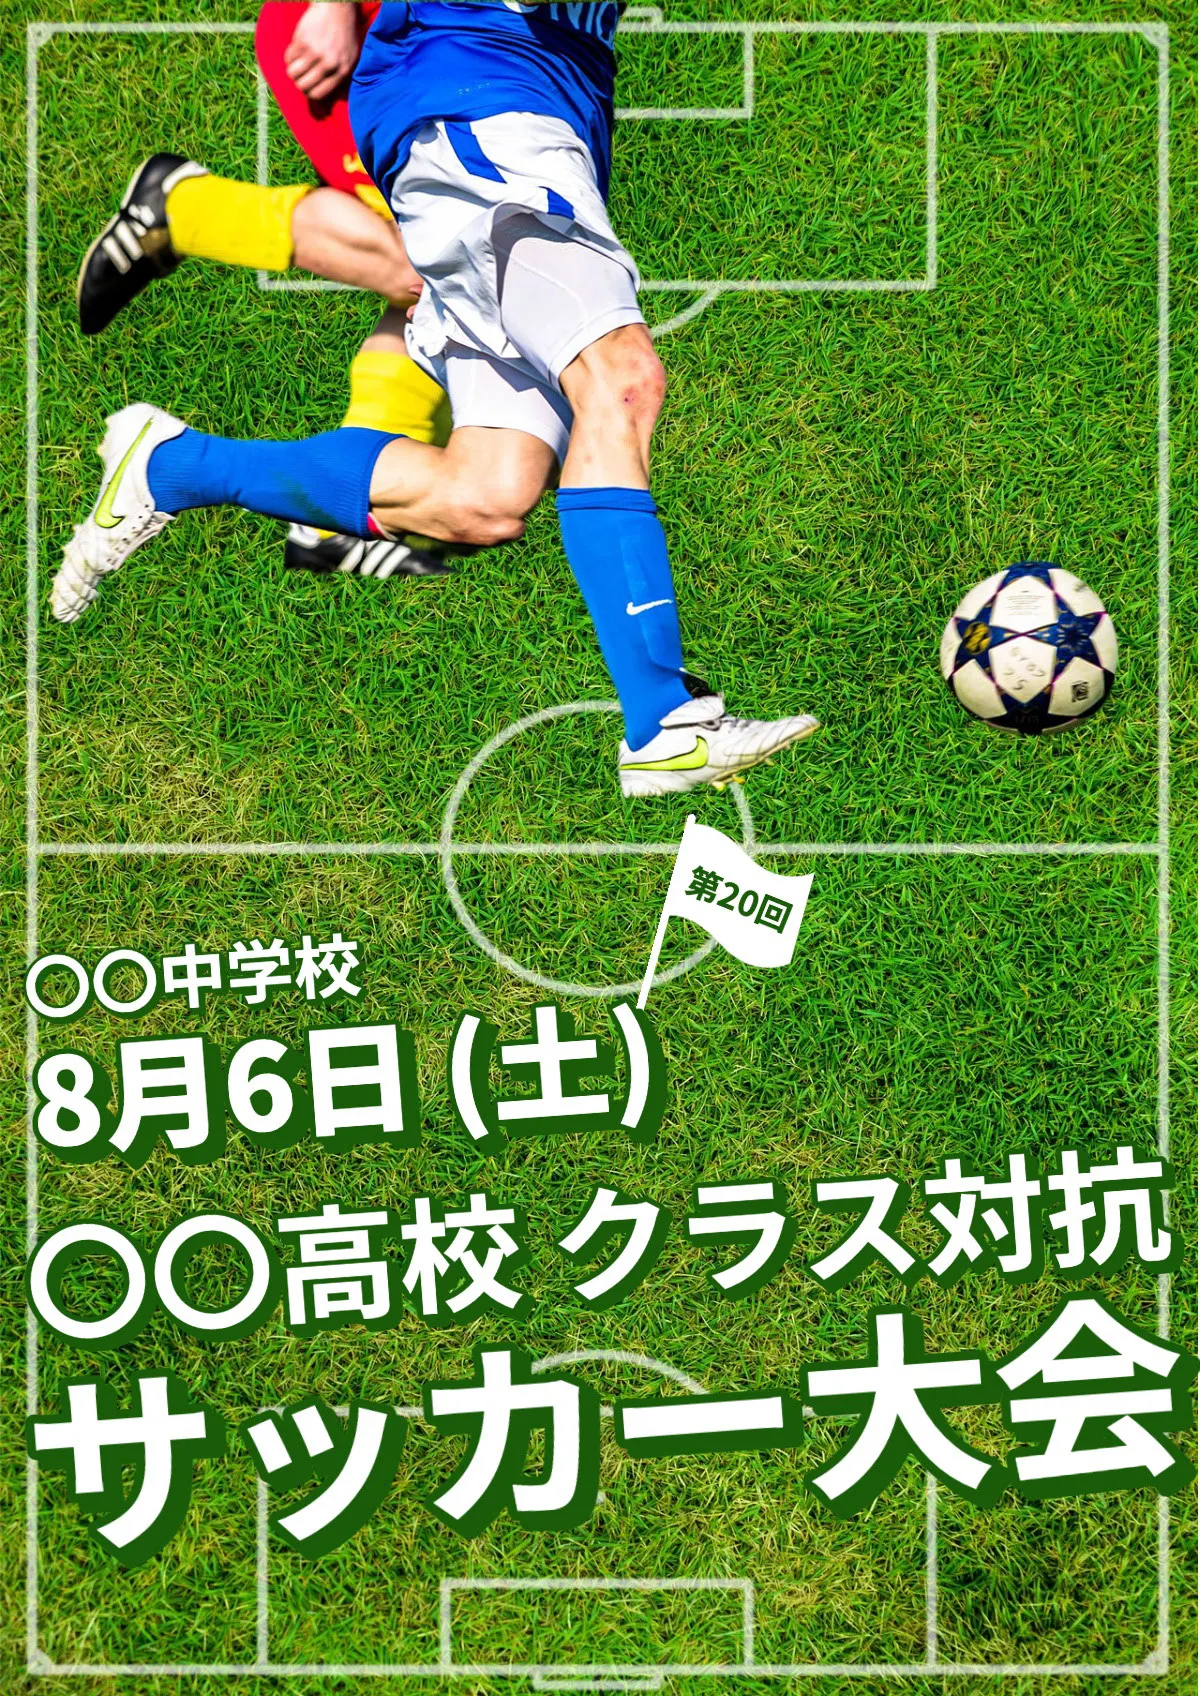 soccer tournament poster